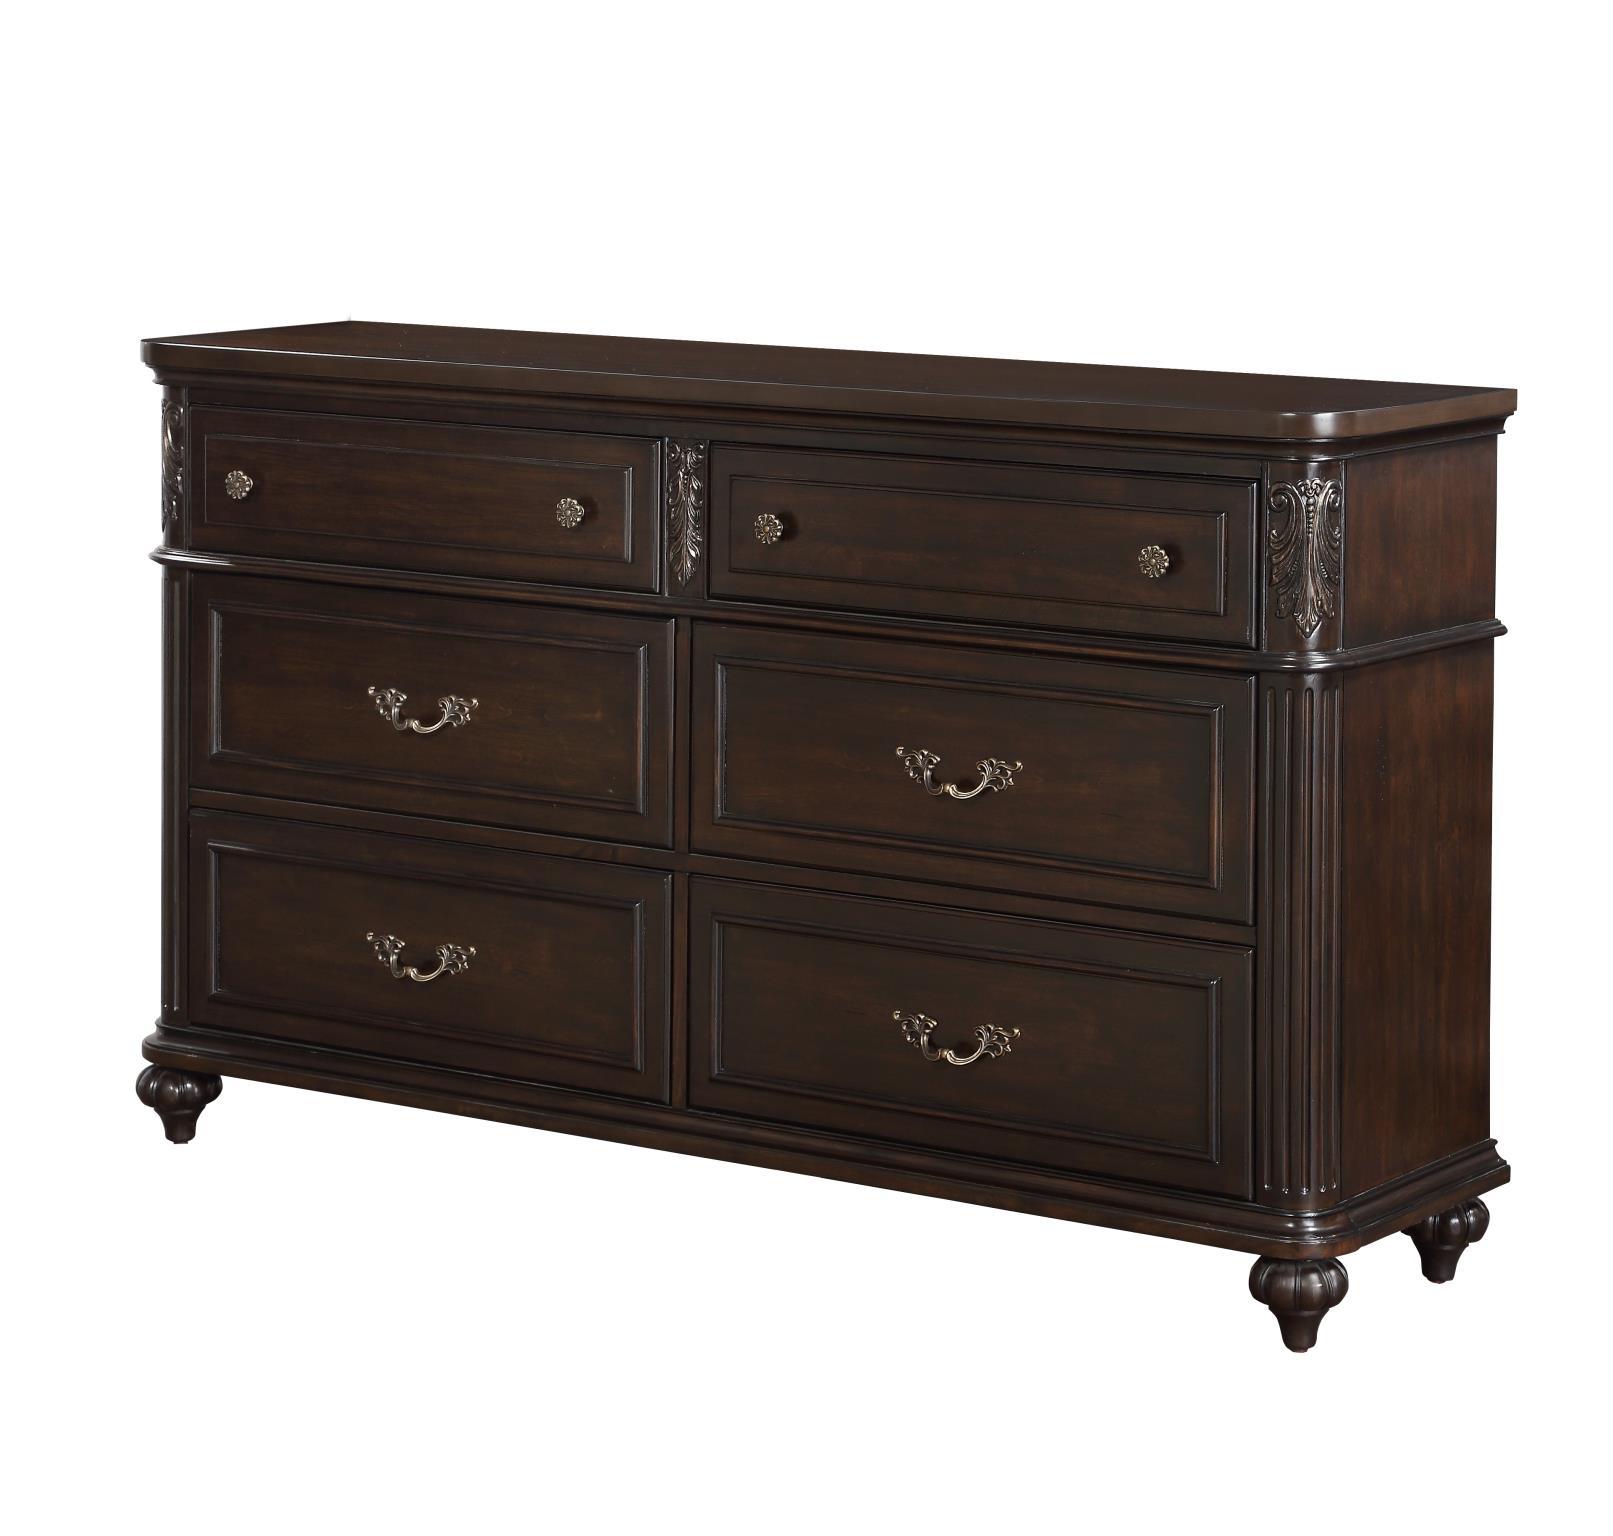 Classic, Transitional Dresser NOTTINGHAM 1610-130 1610-130 in Dark Cherry, Brown 